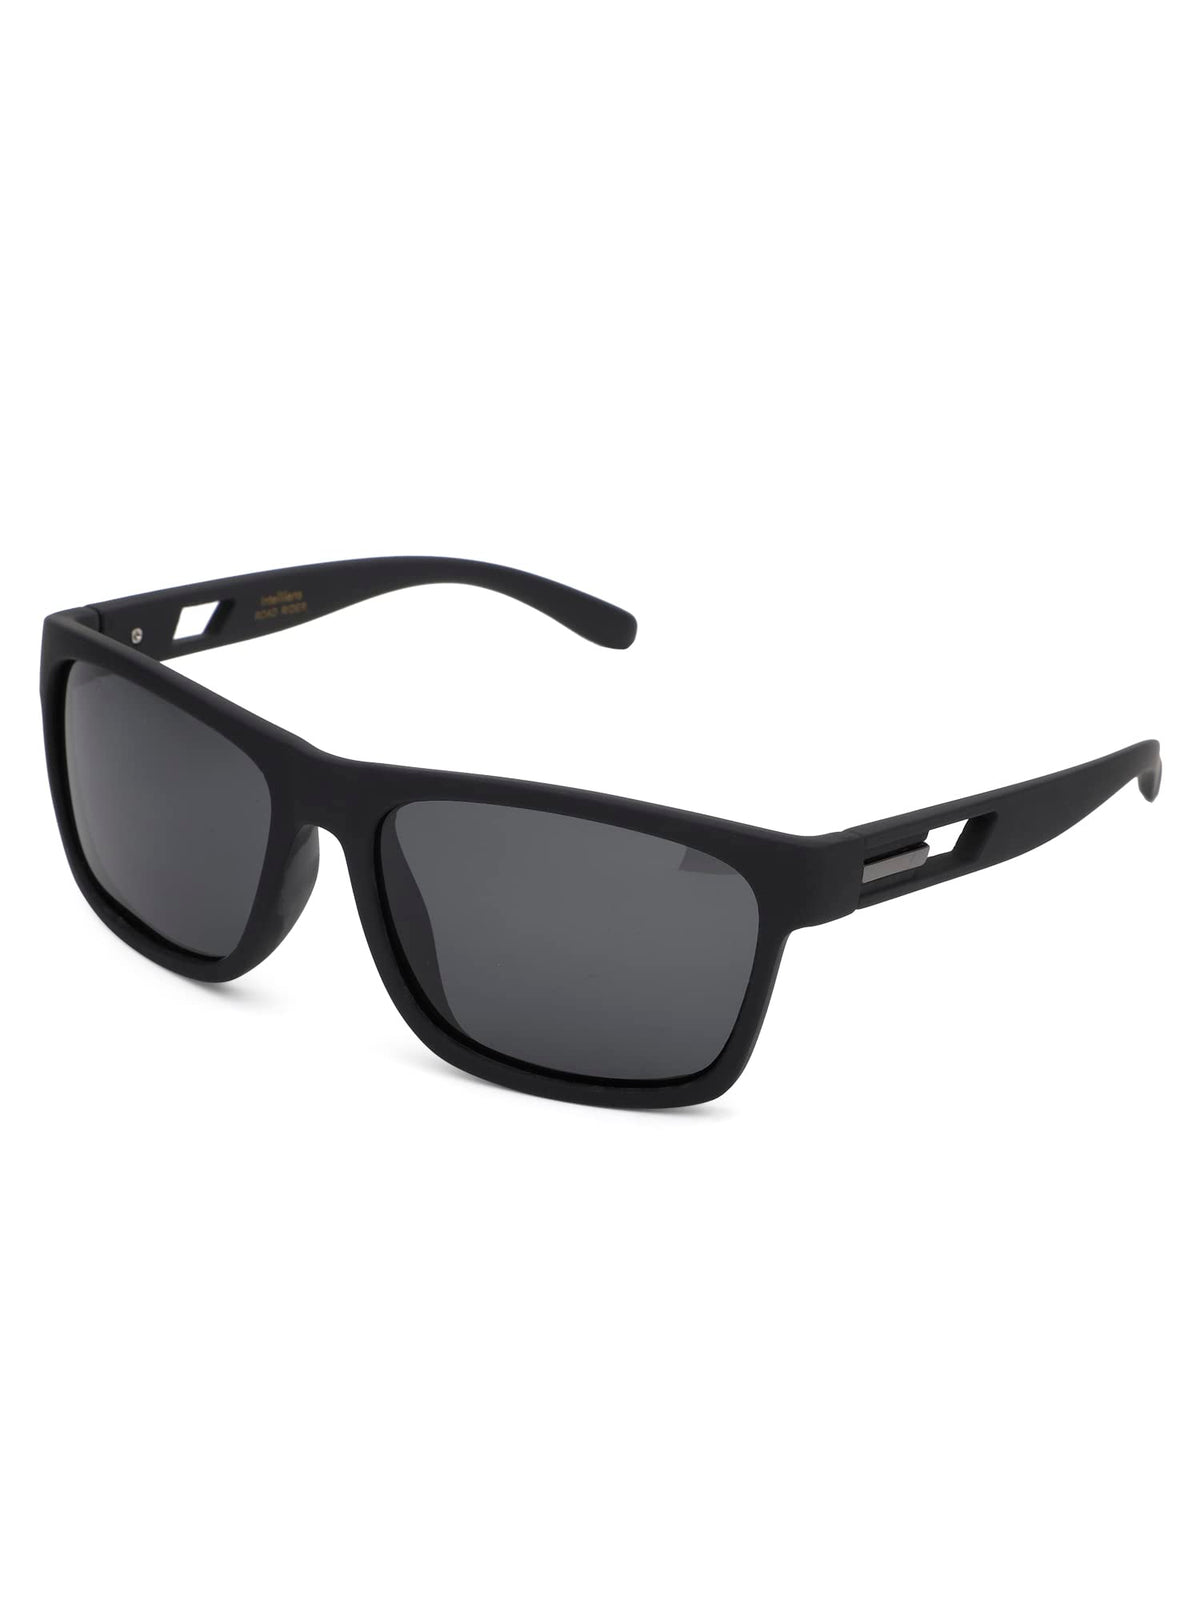 Intellilens RoadRider Branded Latest and Stylish Sunglasses | Polarized and 100% UV Protected | Light Weight, Durable, Premium Looks | Men | Black Lenses | Wayfarer | Medium